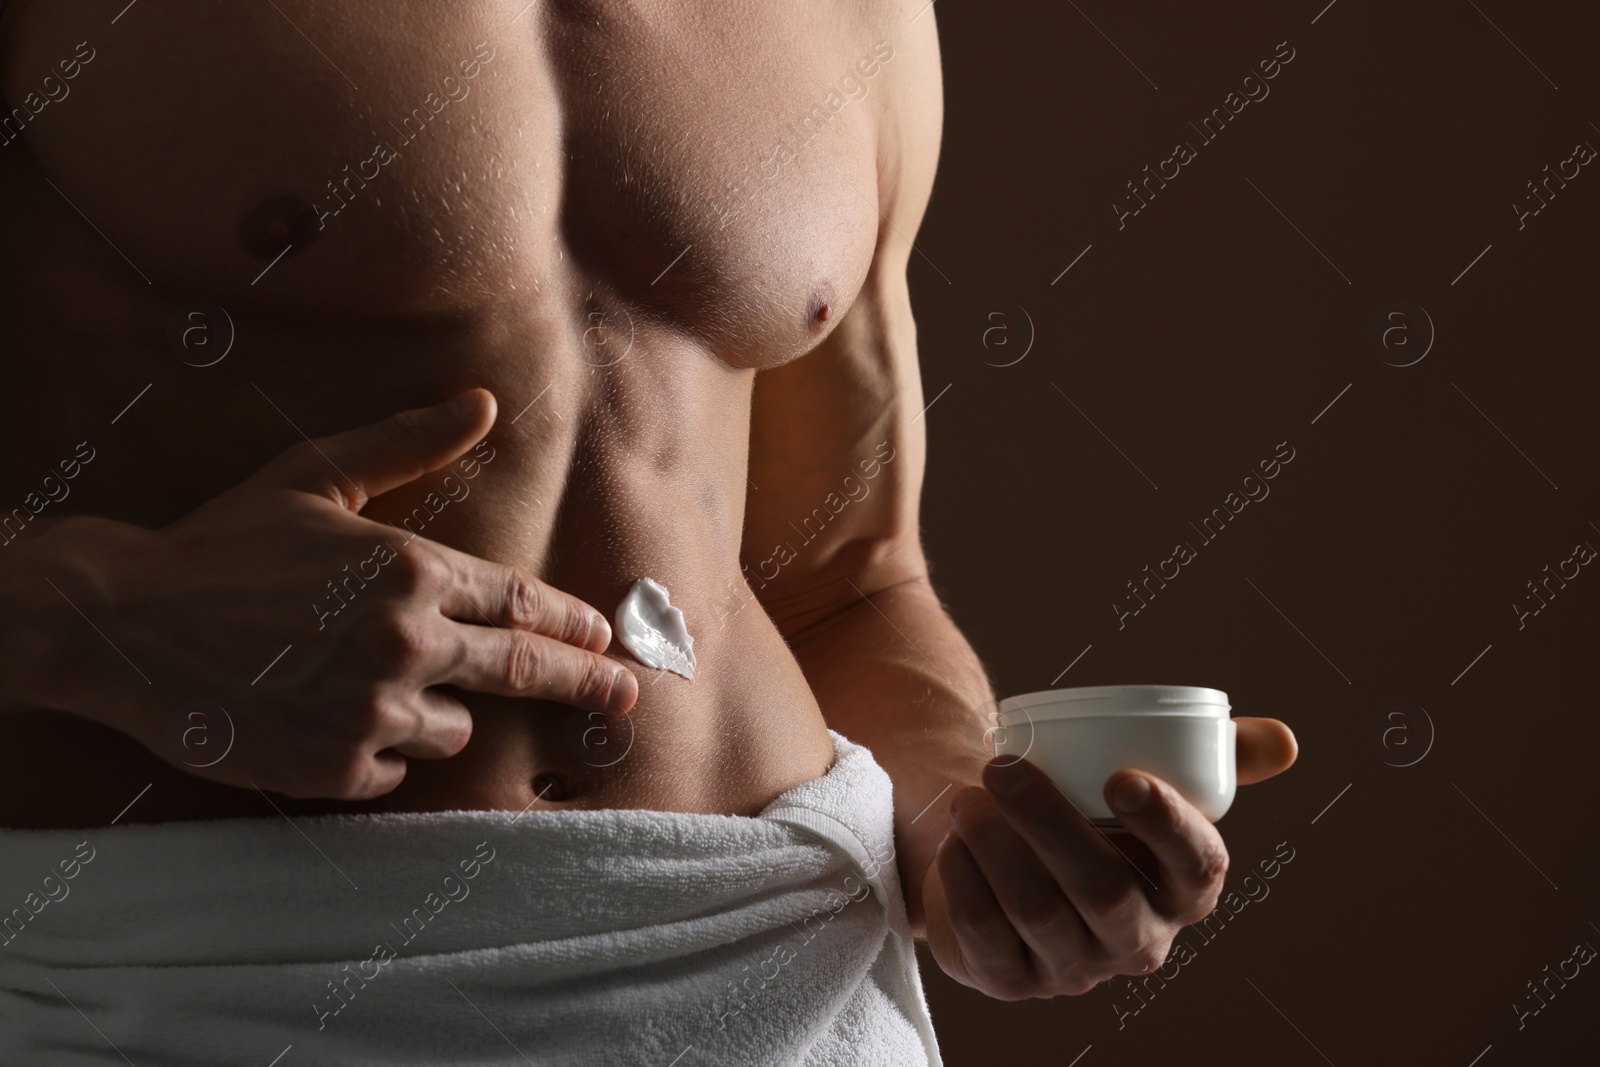 Photo of Man applying moisturizing cream onto his body on brown background, closeup